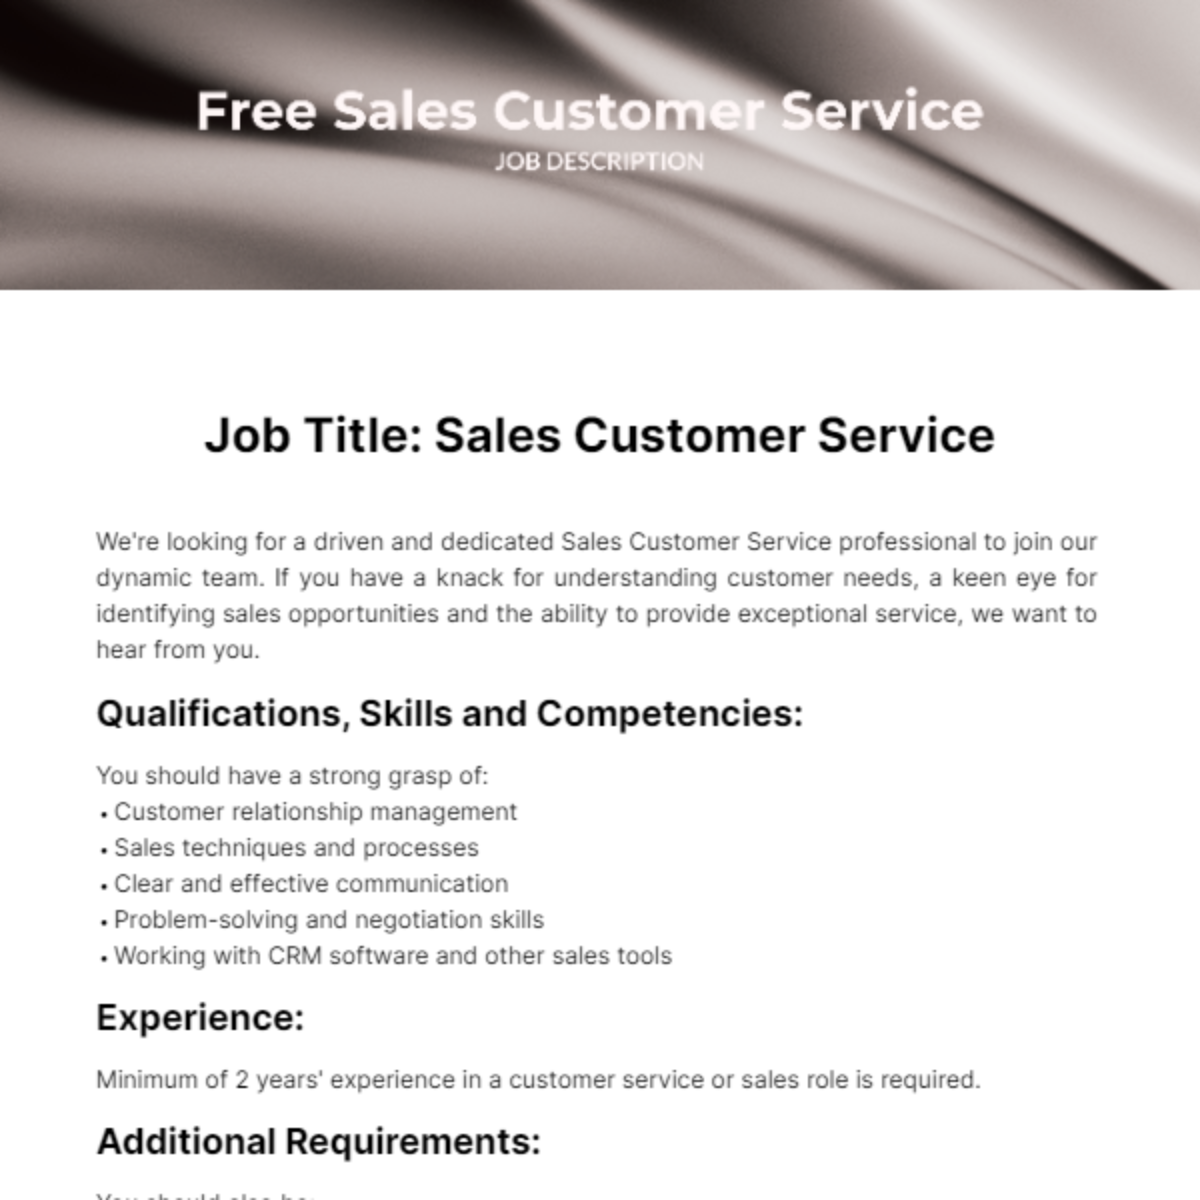 Free Sales Customer Service Job Description Template